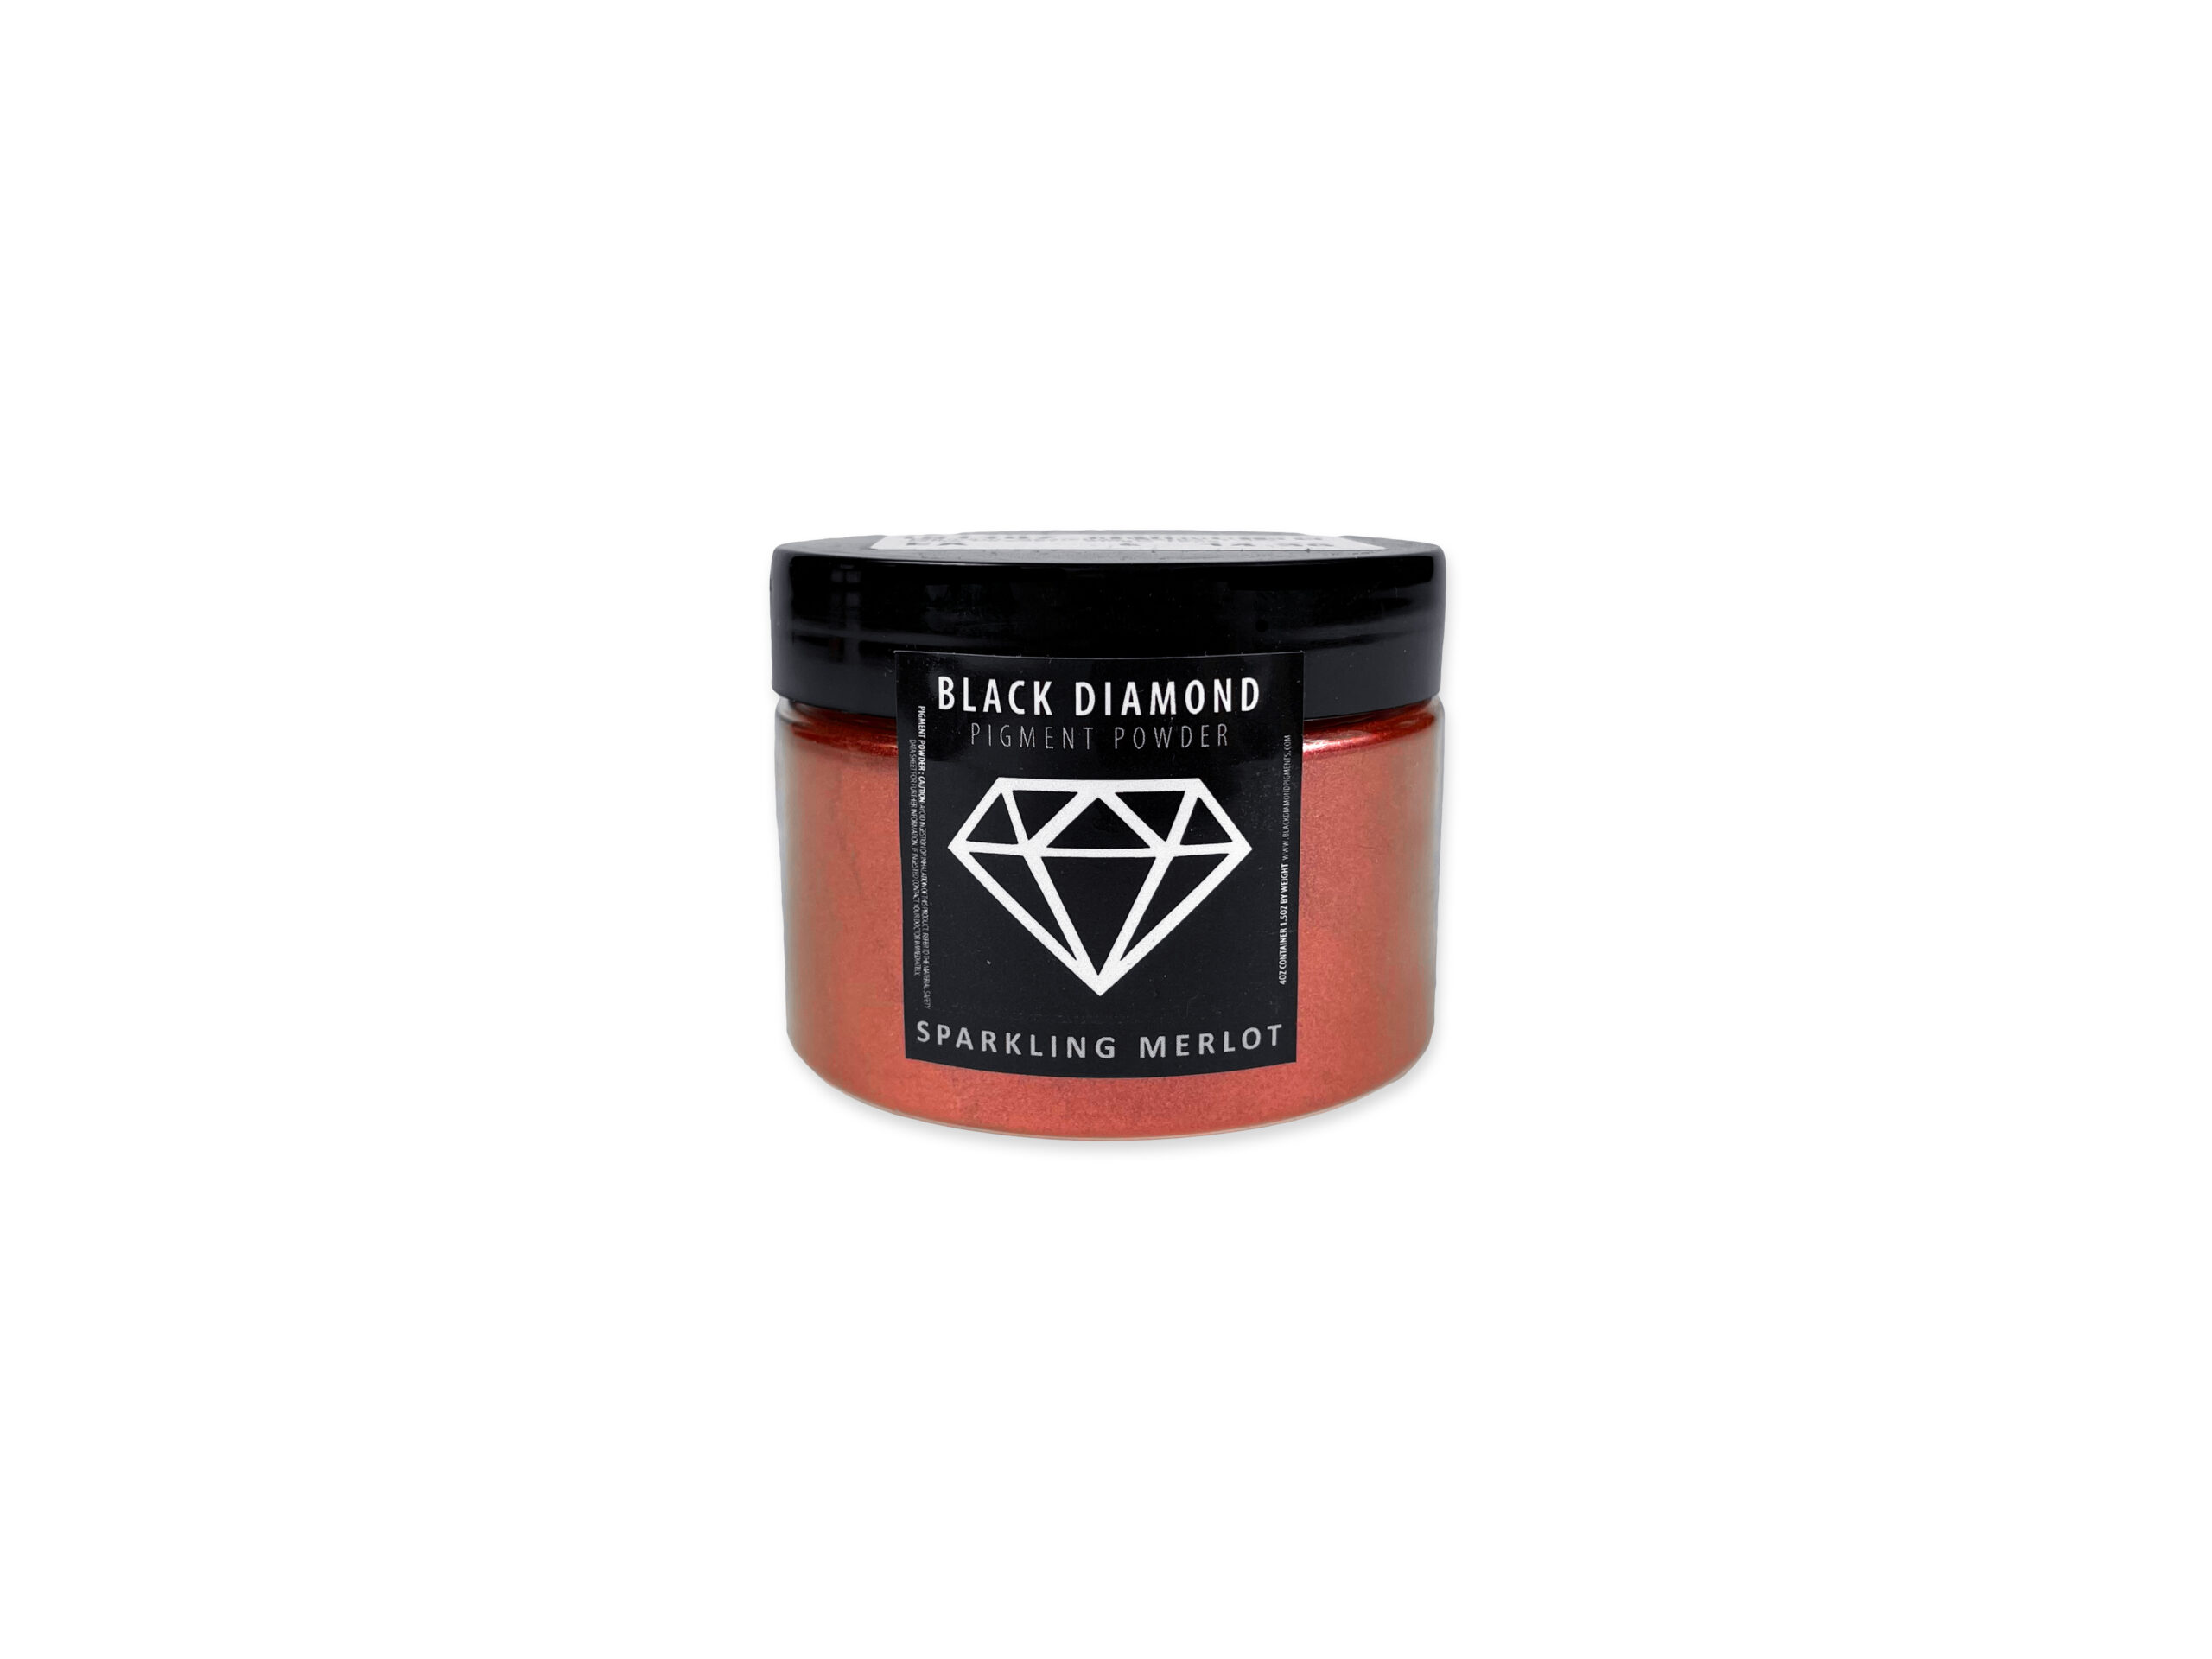 Black Diamond Mica Pigment Powder for epoxy resin in the color Sparkling Merlot. (1.5oz container)